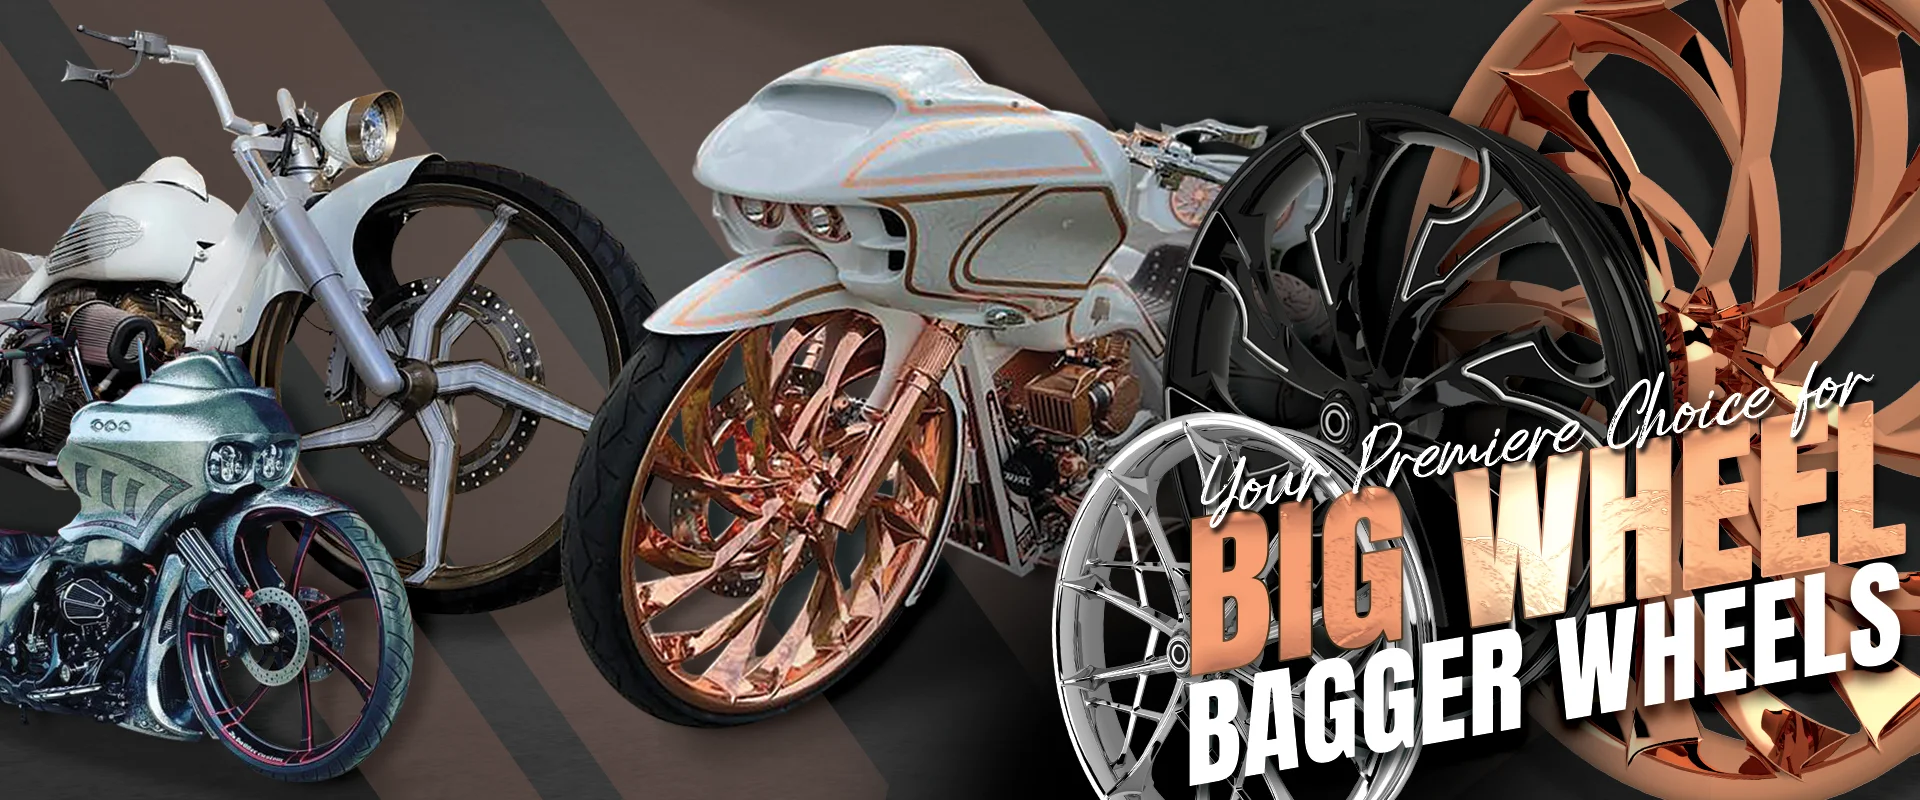 Premiere Choice for Big Wheel Bagger Wheels